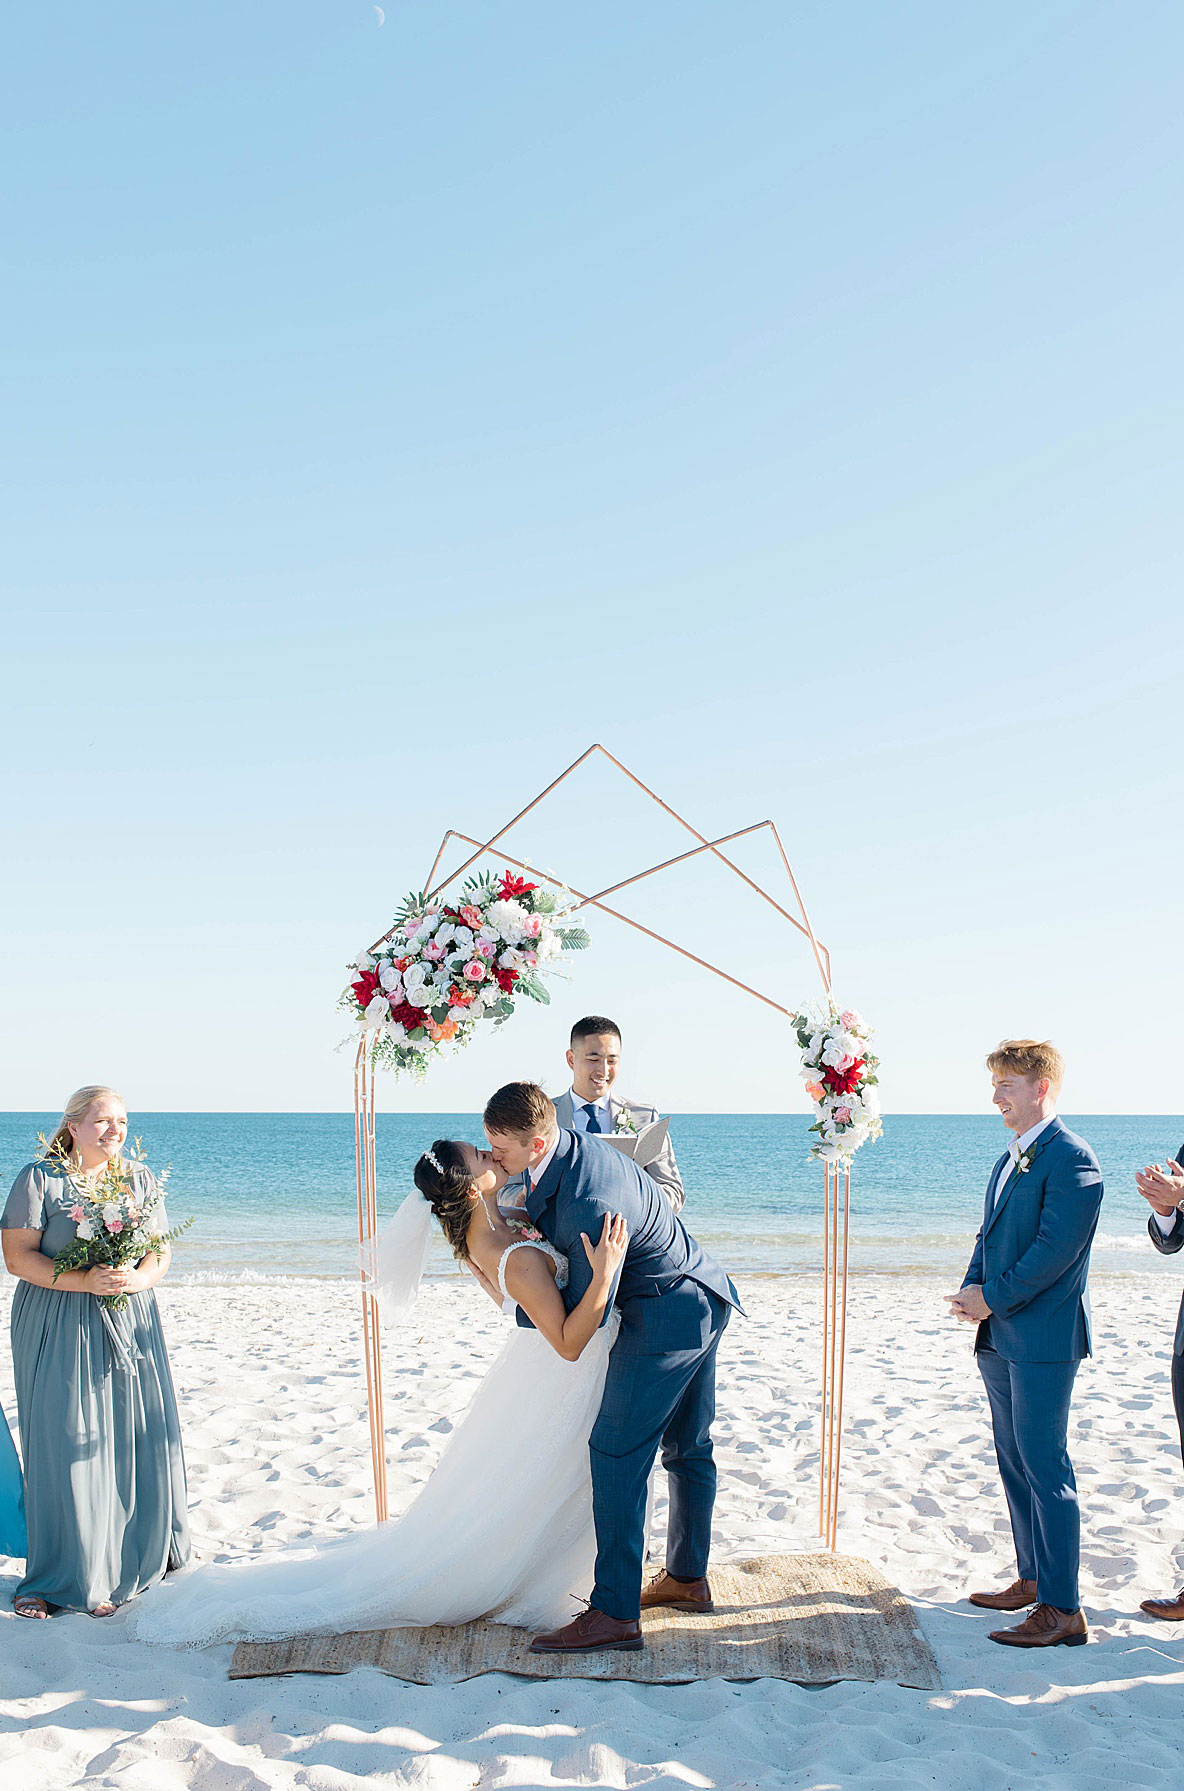 Modern Golf Shores, Alabama Beach wedding by editorial wedding photographer Jesi Wilcox.